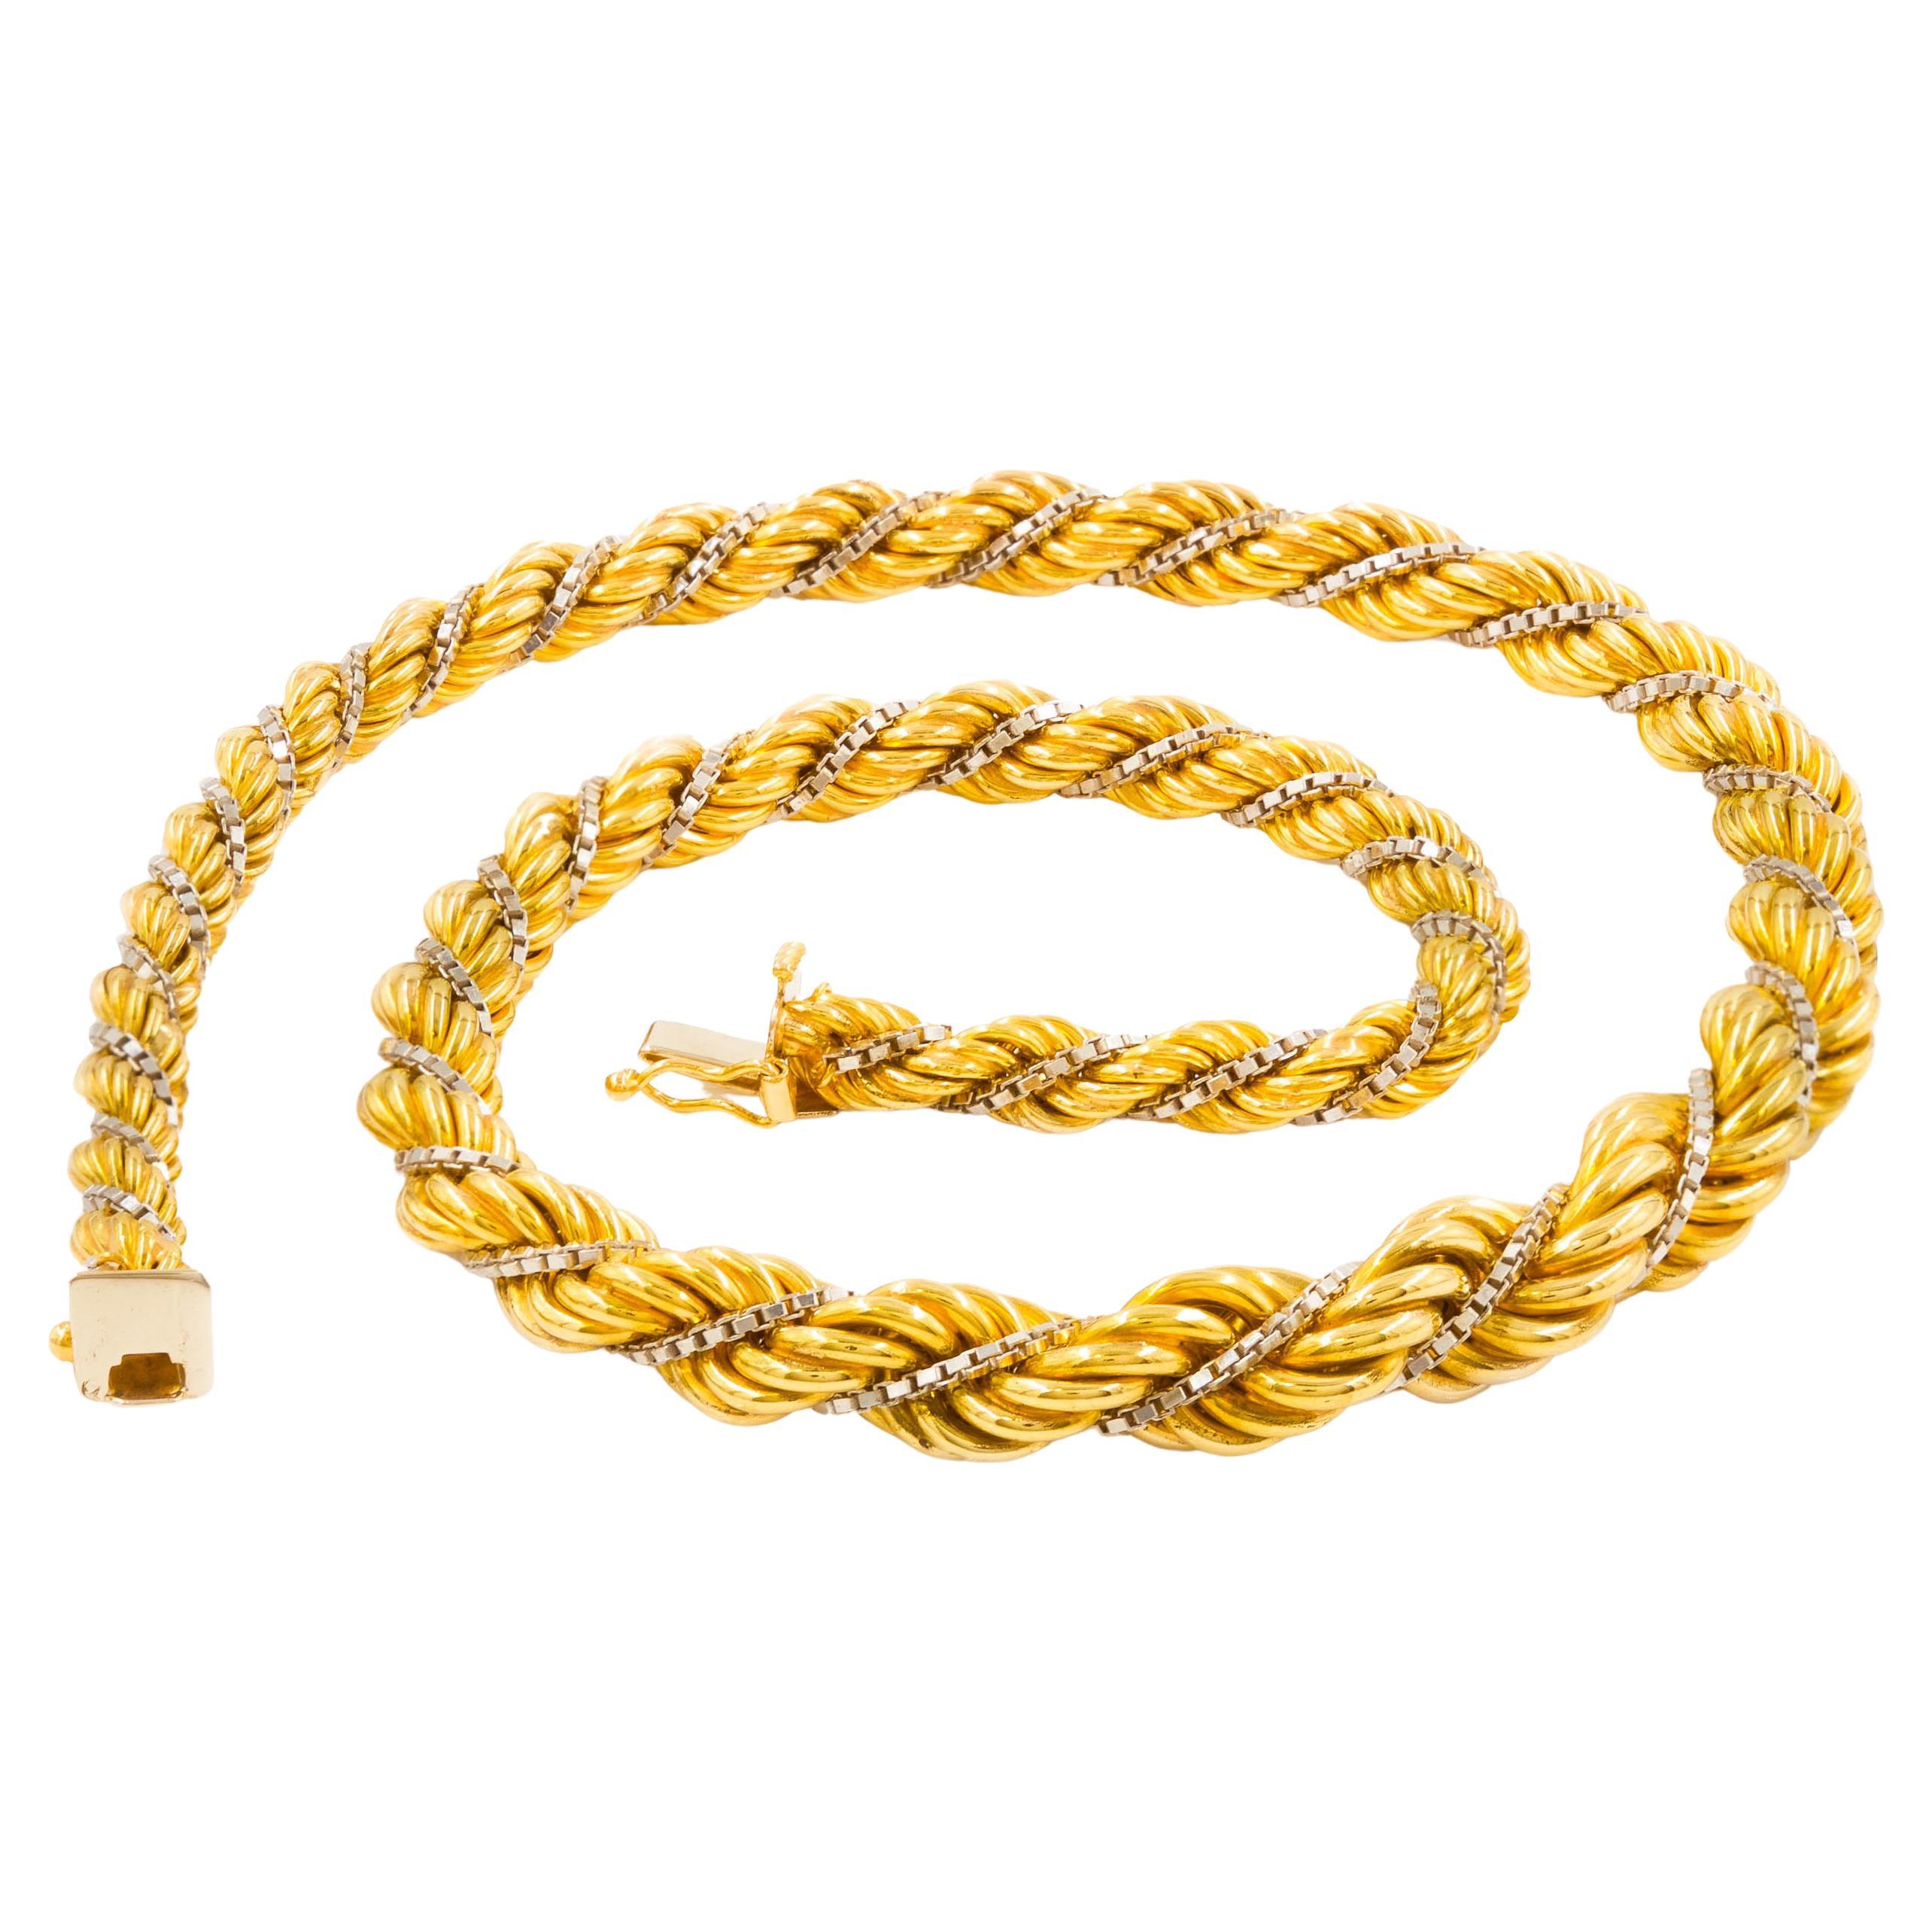 Collier Vintage en or jaune 18k et corde torsadée avec accents en or 14k